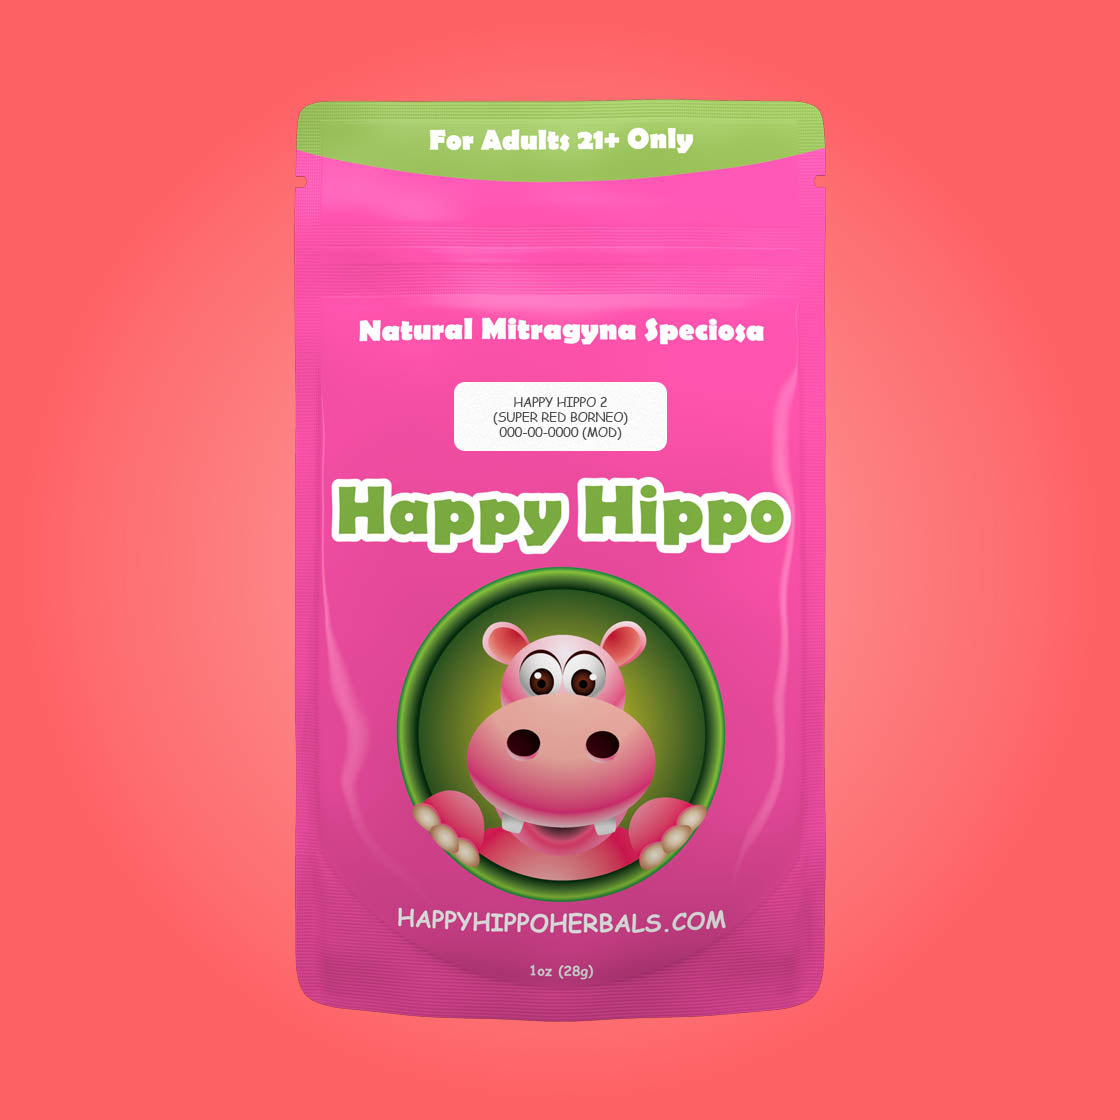 Product Image depicting a 1oz bag of Happy Hippo Red Vein Borneo Kratom Powder (Mitragyna Speciosa).